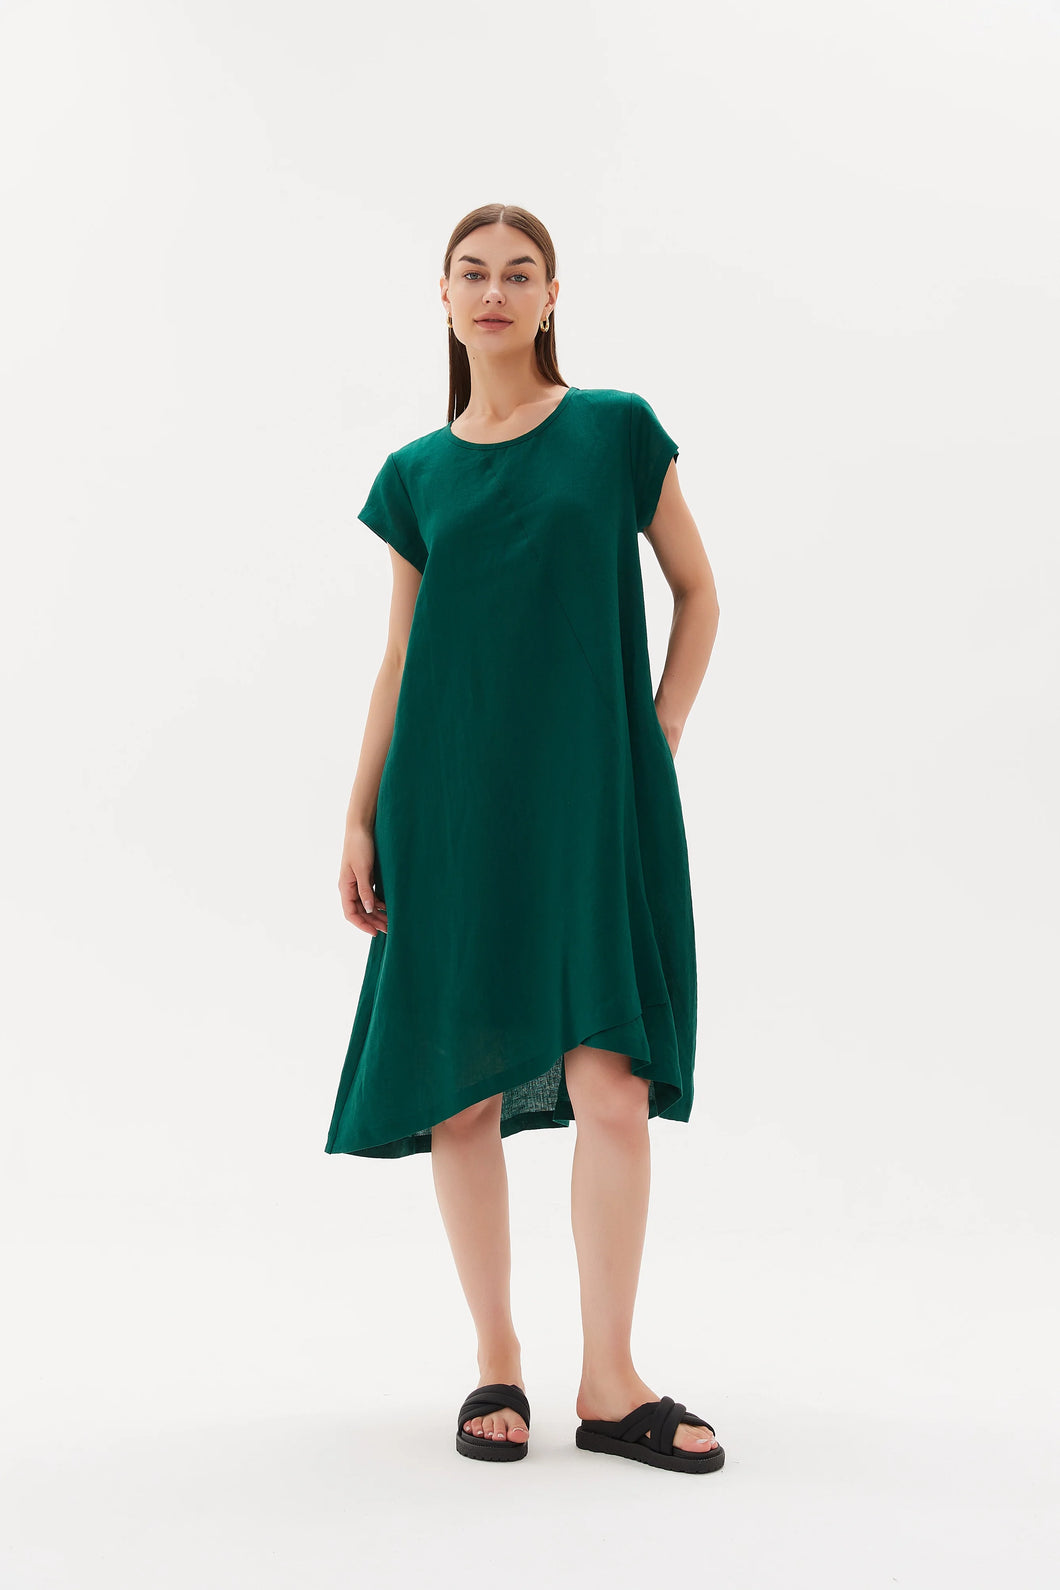 Tirelli Cap Sleeve Cross Over Dress Emerald Green